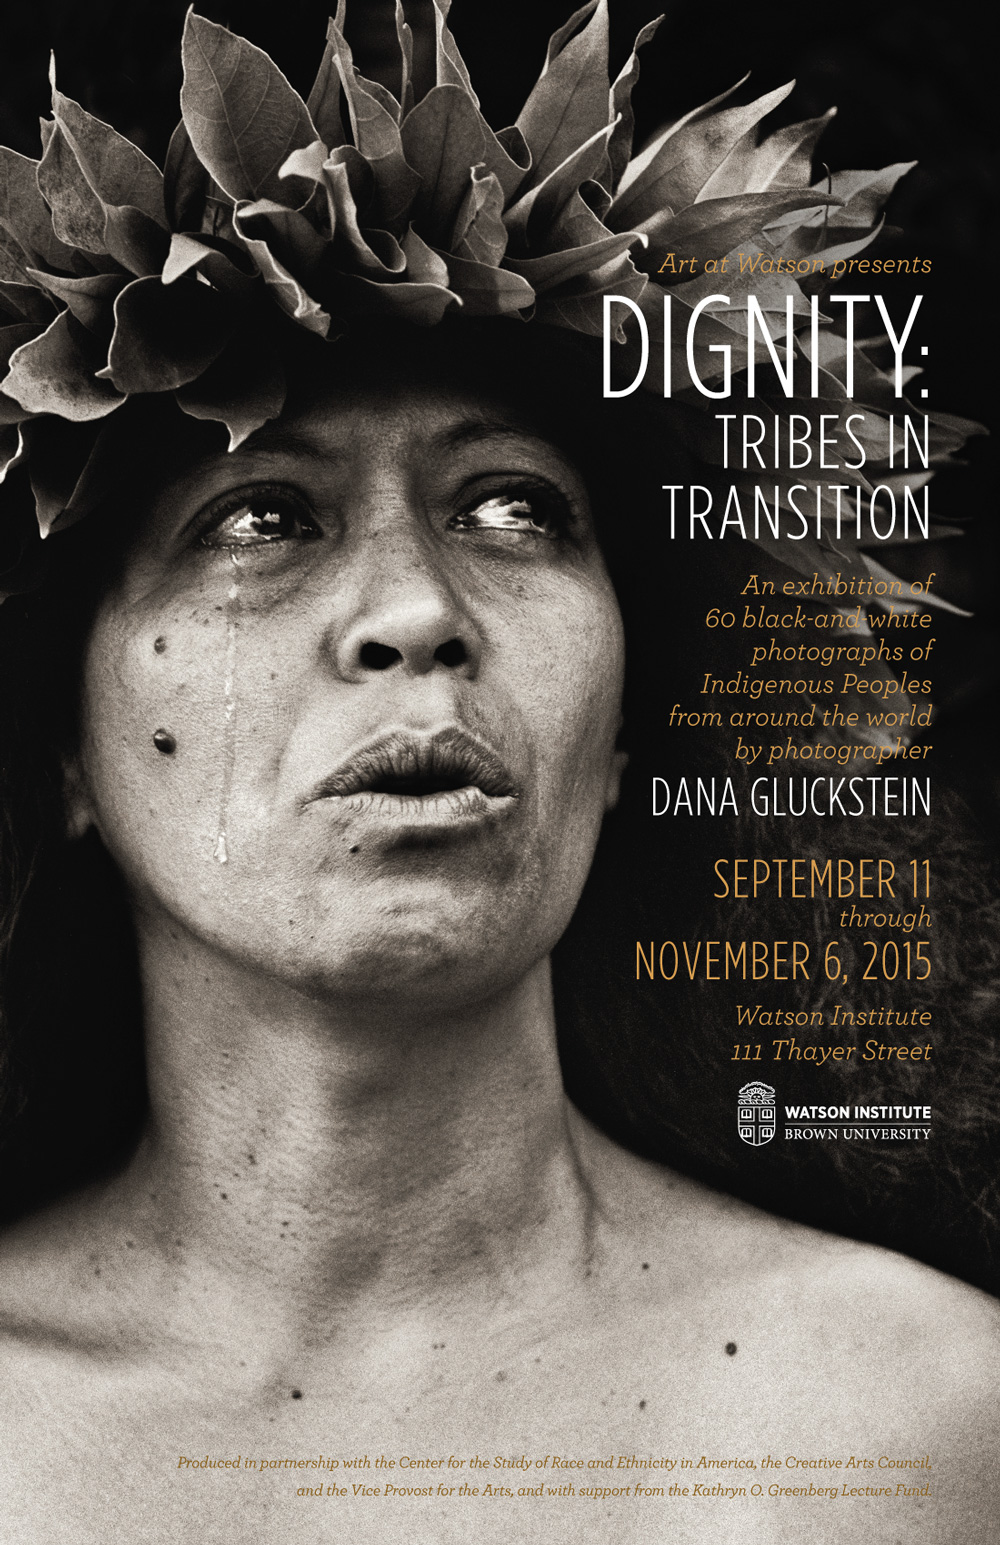 brown_university_watson_institute_dignity_tribes_in_transition_poster_dana_gluckstein